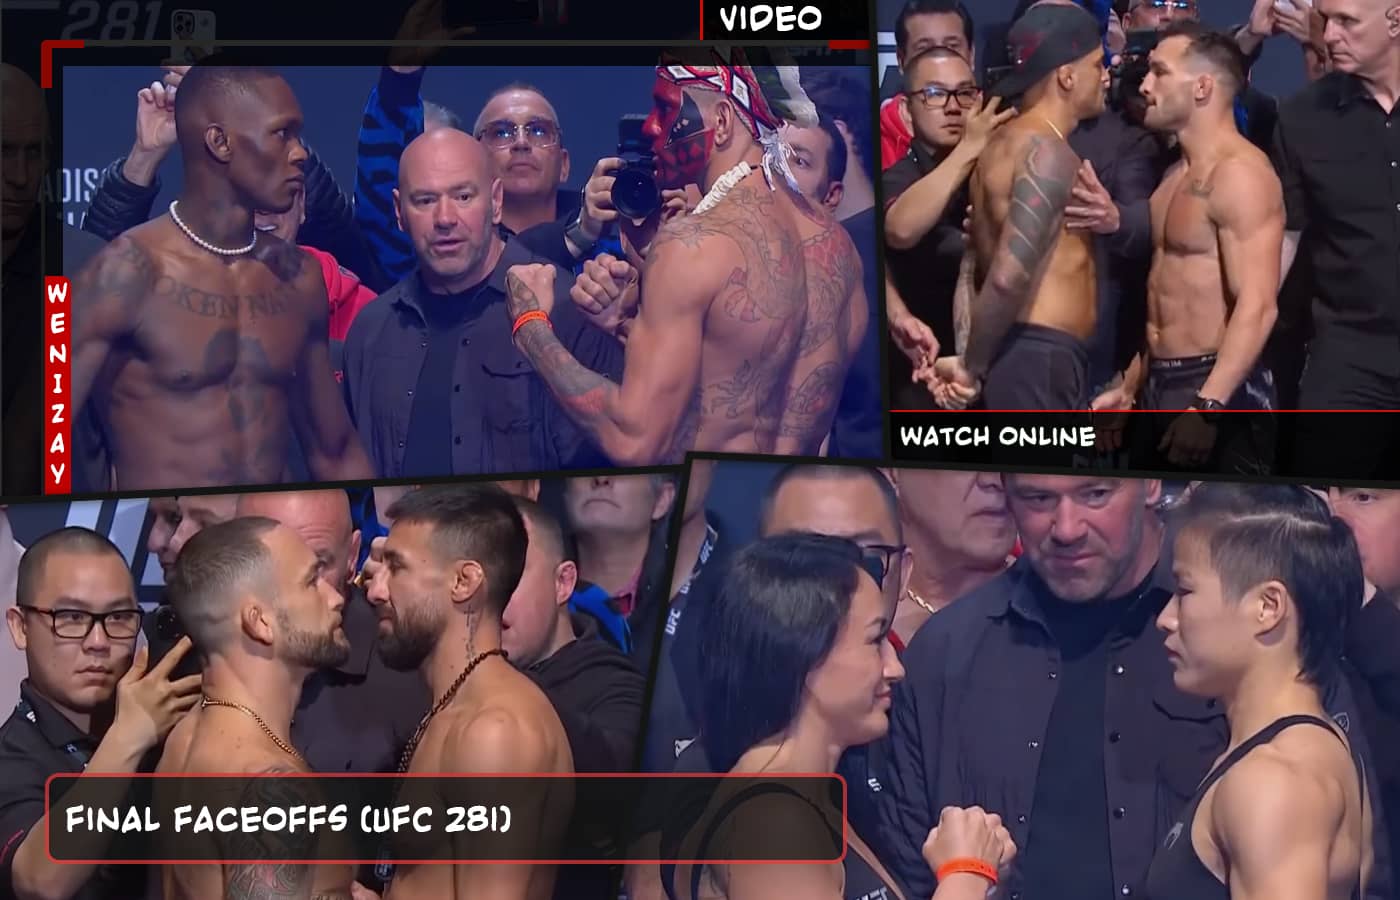 UFC 281, UFC, UFC video